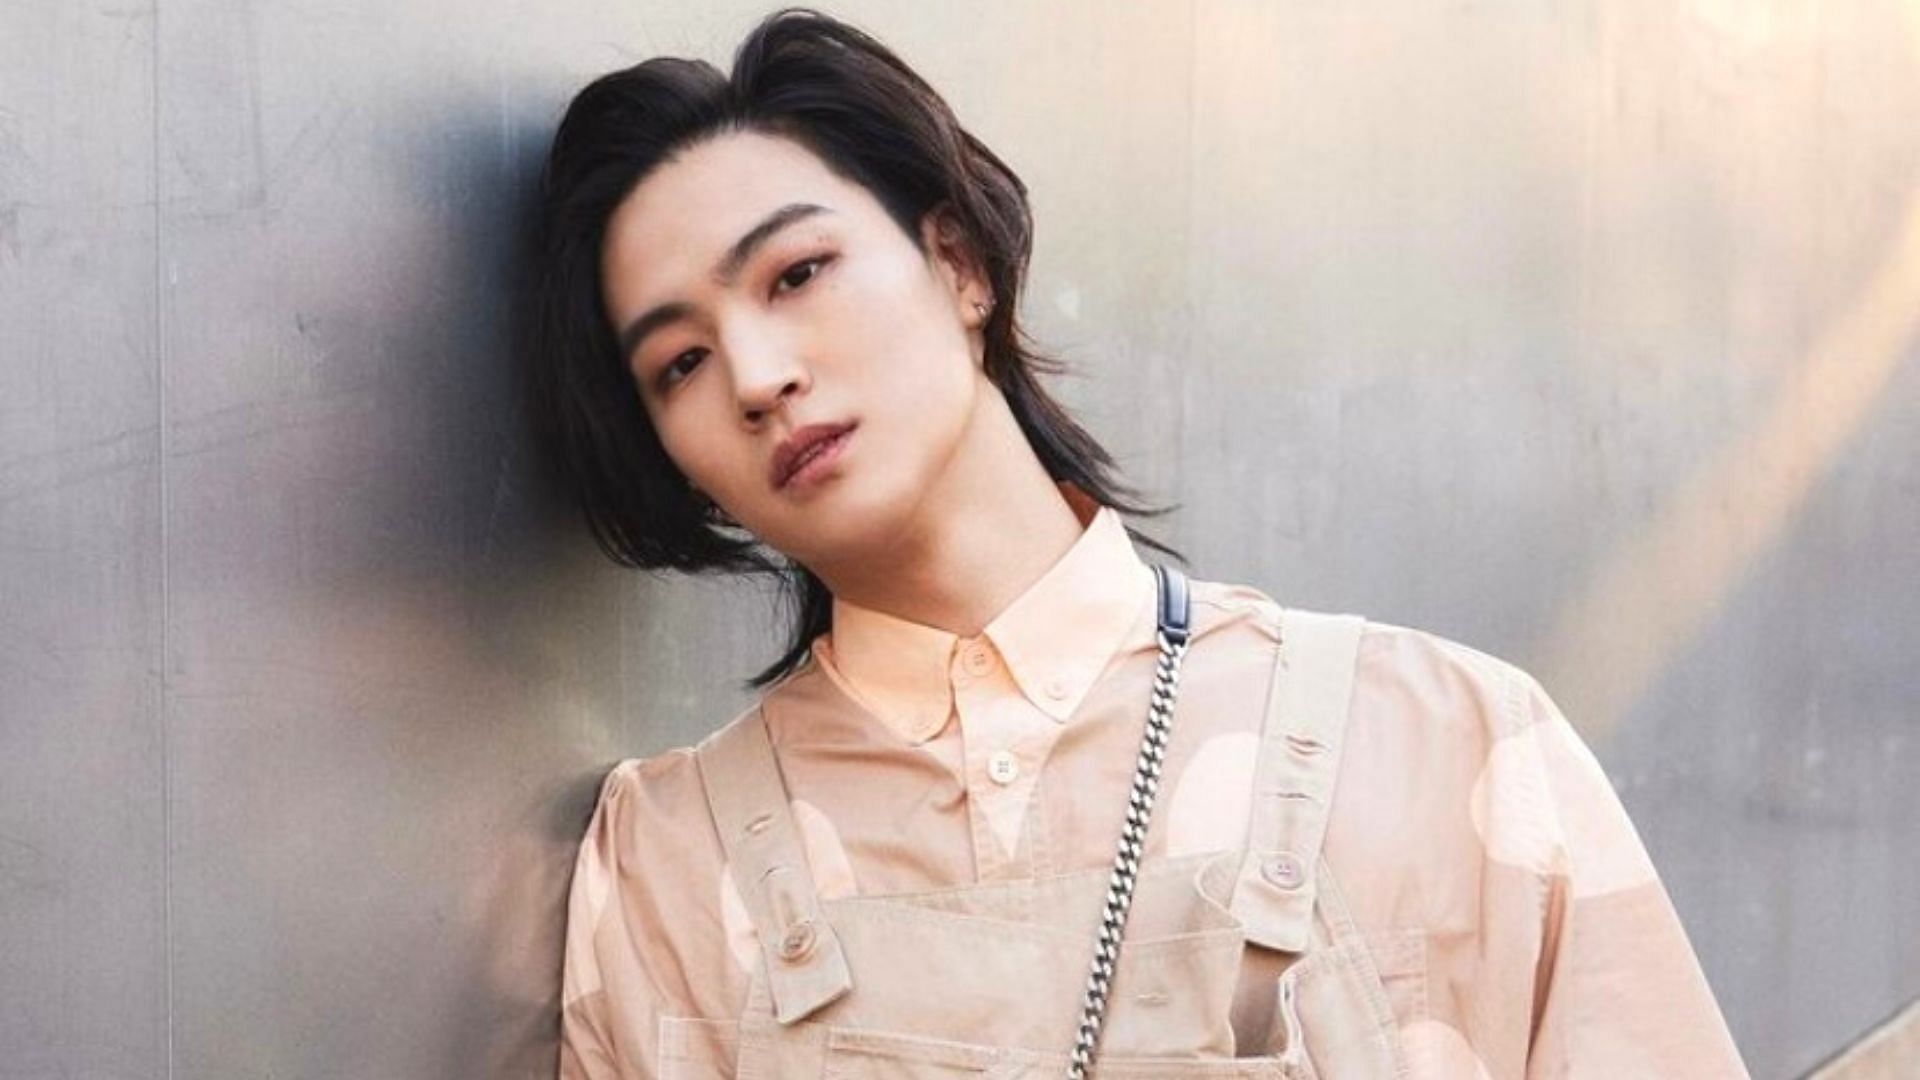 A still of the K-pop idol (Image via @jaybnow.hr/Instagram)